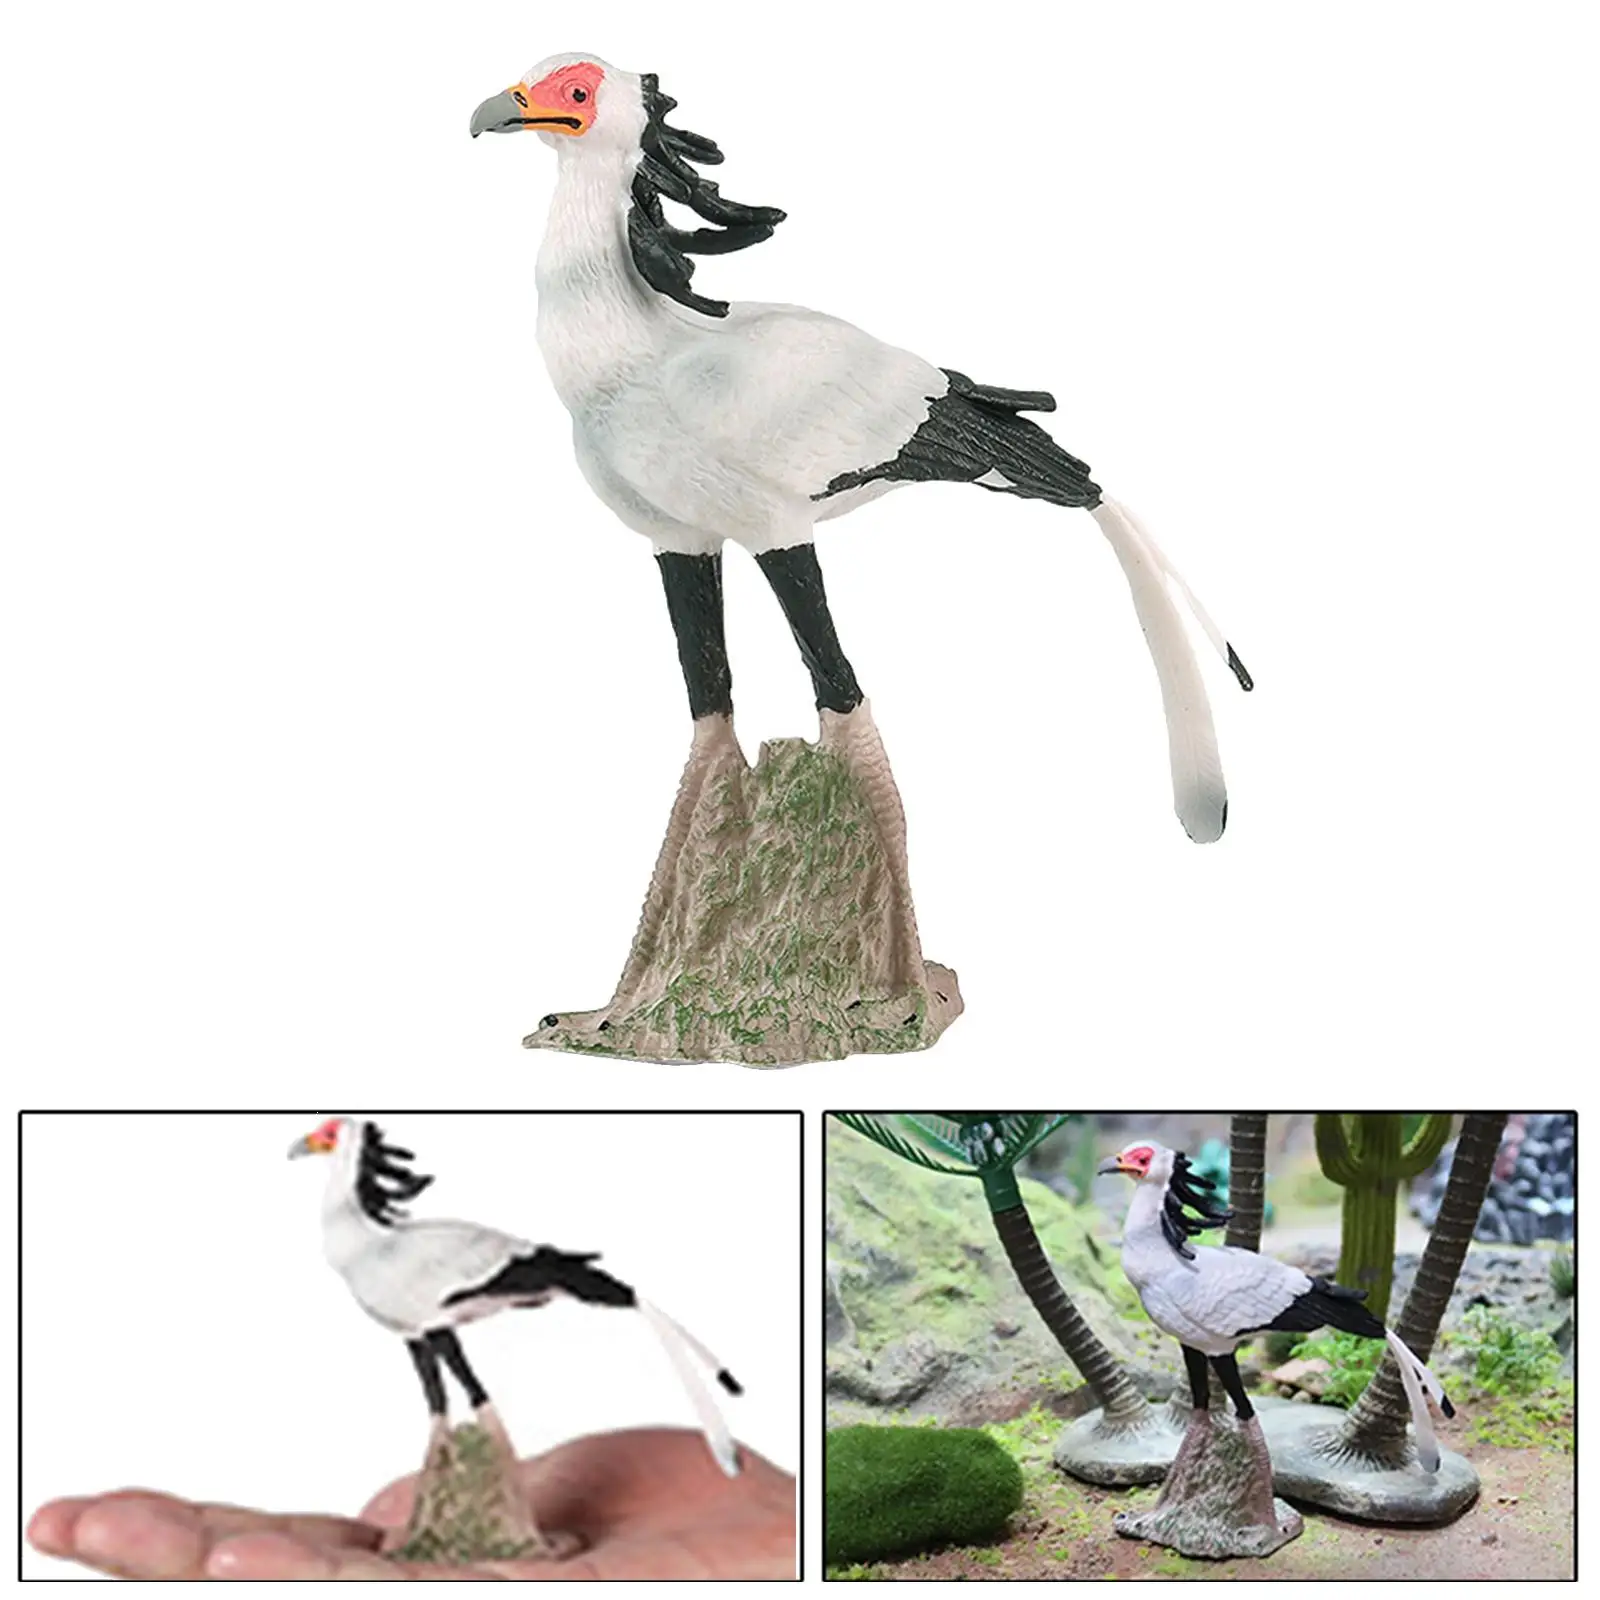 Plastic Secretary Bird Figures for Kids Toy Fairy Garden Yard and Patio Lawn